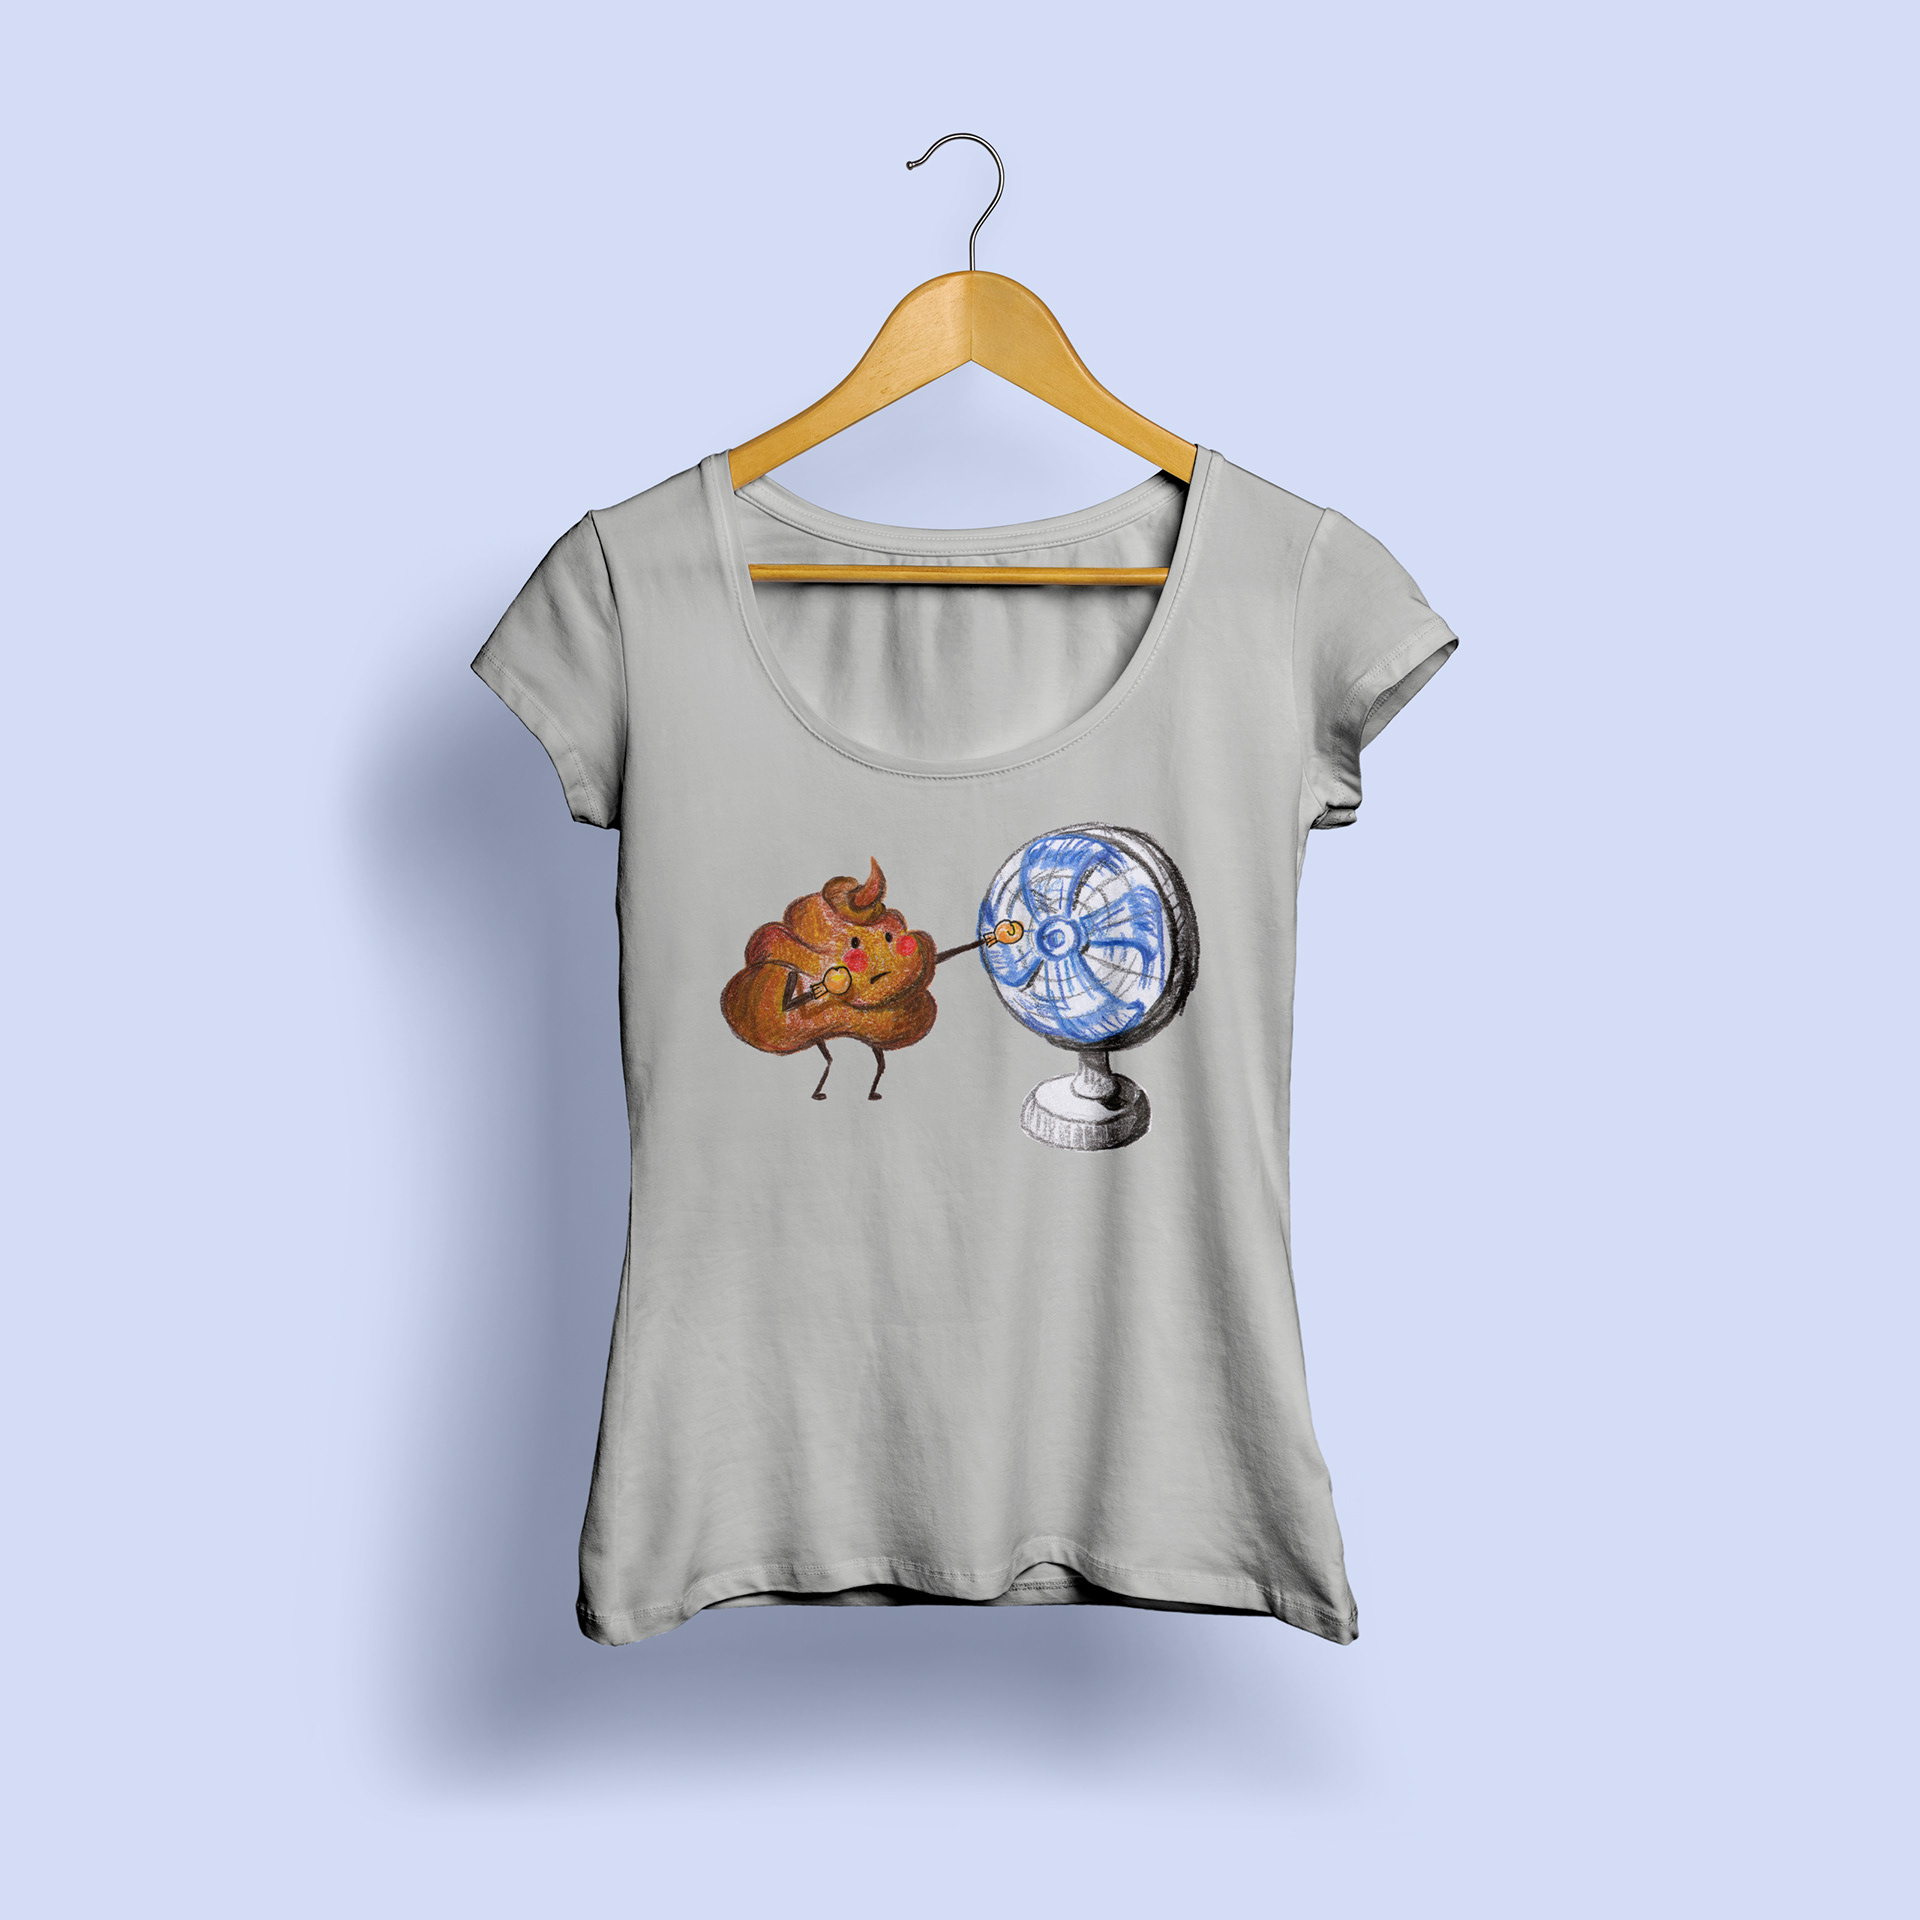 Print Your Own T Shirts Dublin Nils Stucki Kieferorthopade - roblox custom shirt template nils stucki kieferorthopade